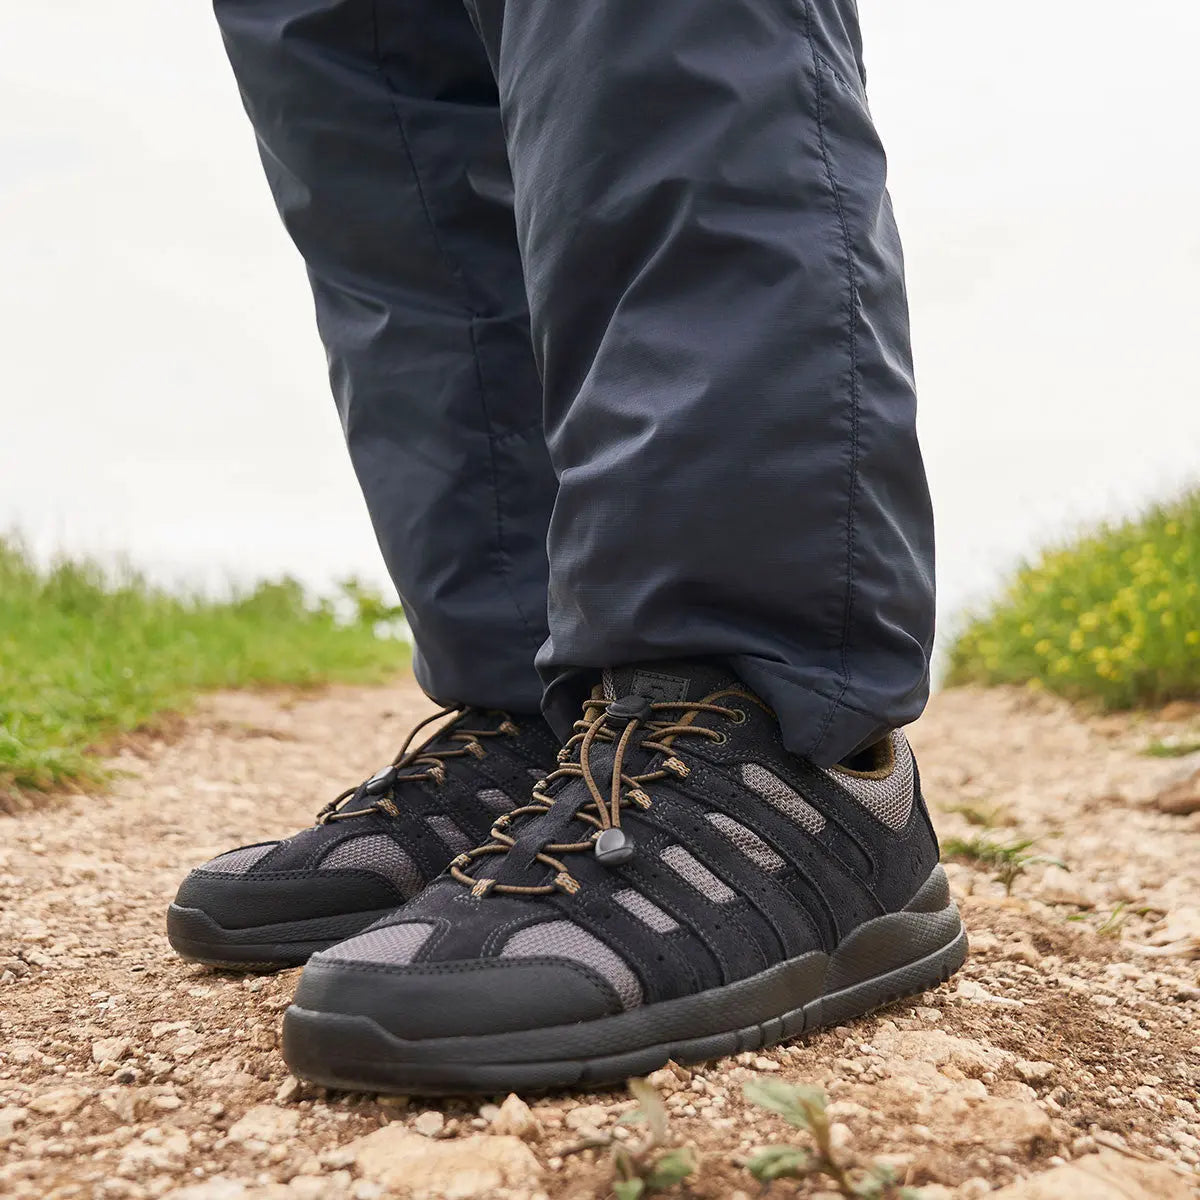 Anodyne Men's No.44 Trail Walker - Dark Grey being enjoyed on a hike outdoors